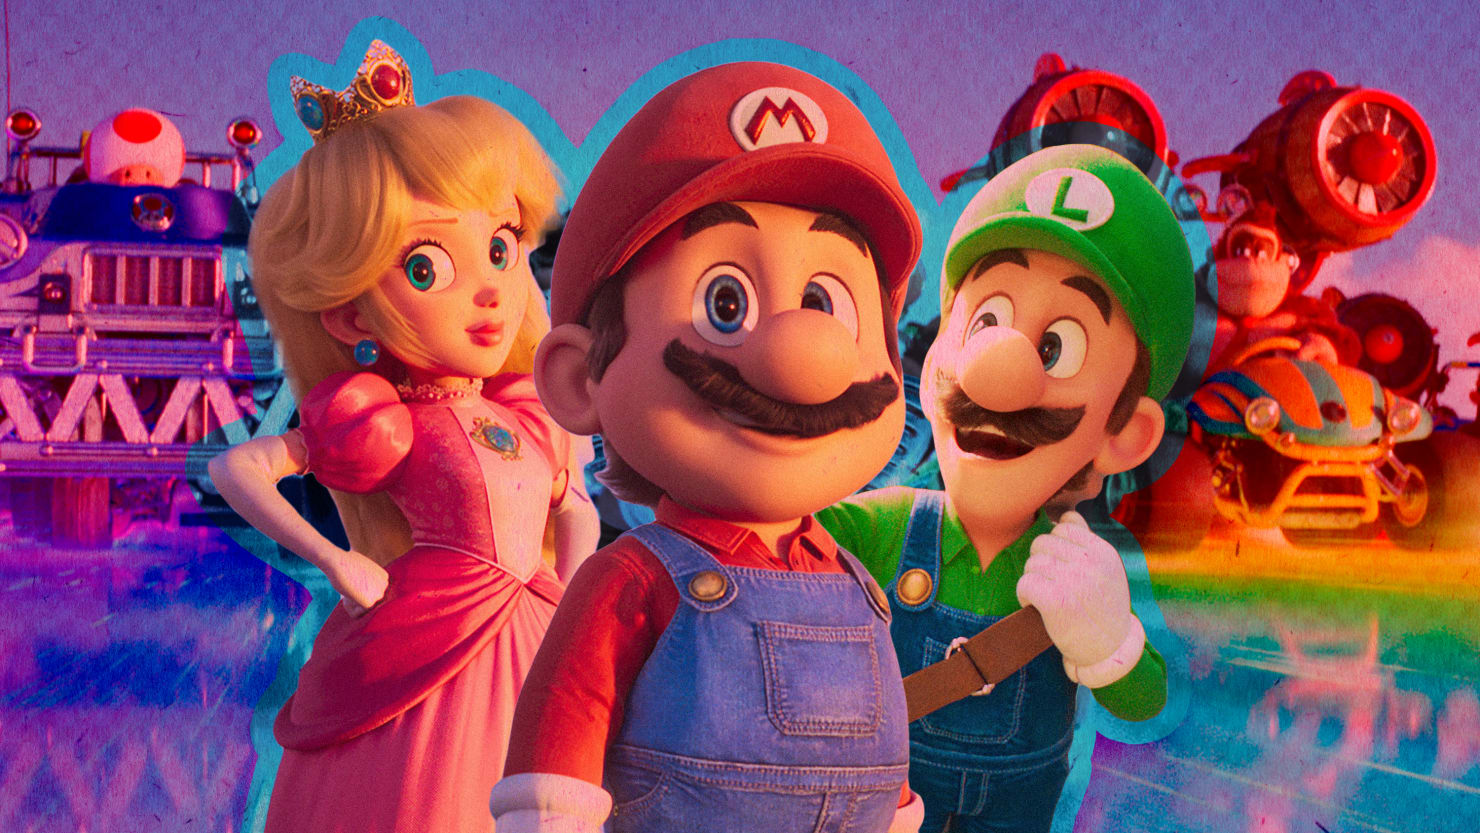 Shigeru Miyamoto Reveals Mario Voice Actor Called Him 'Papa